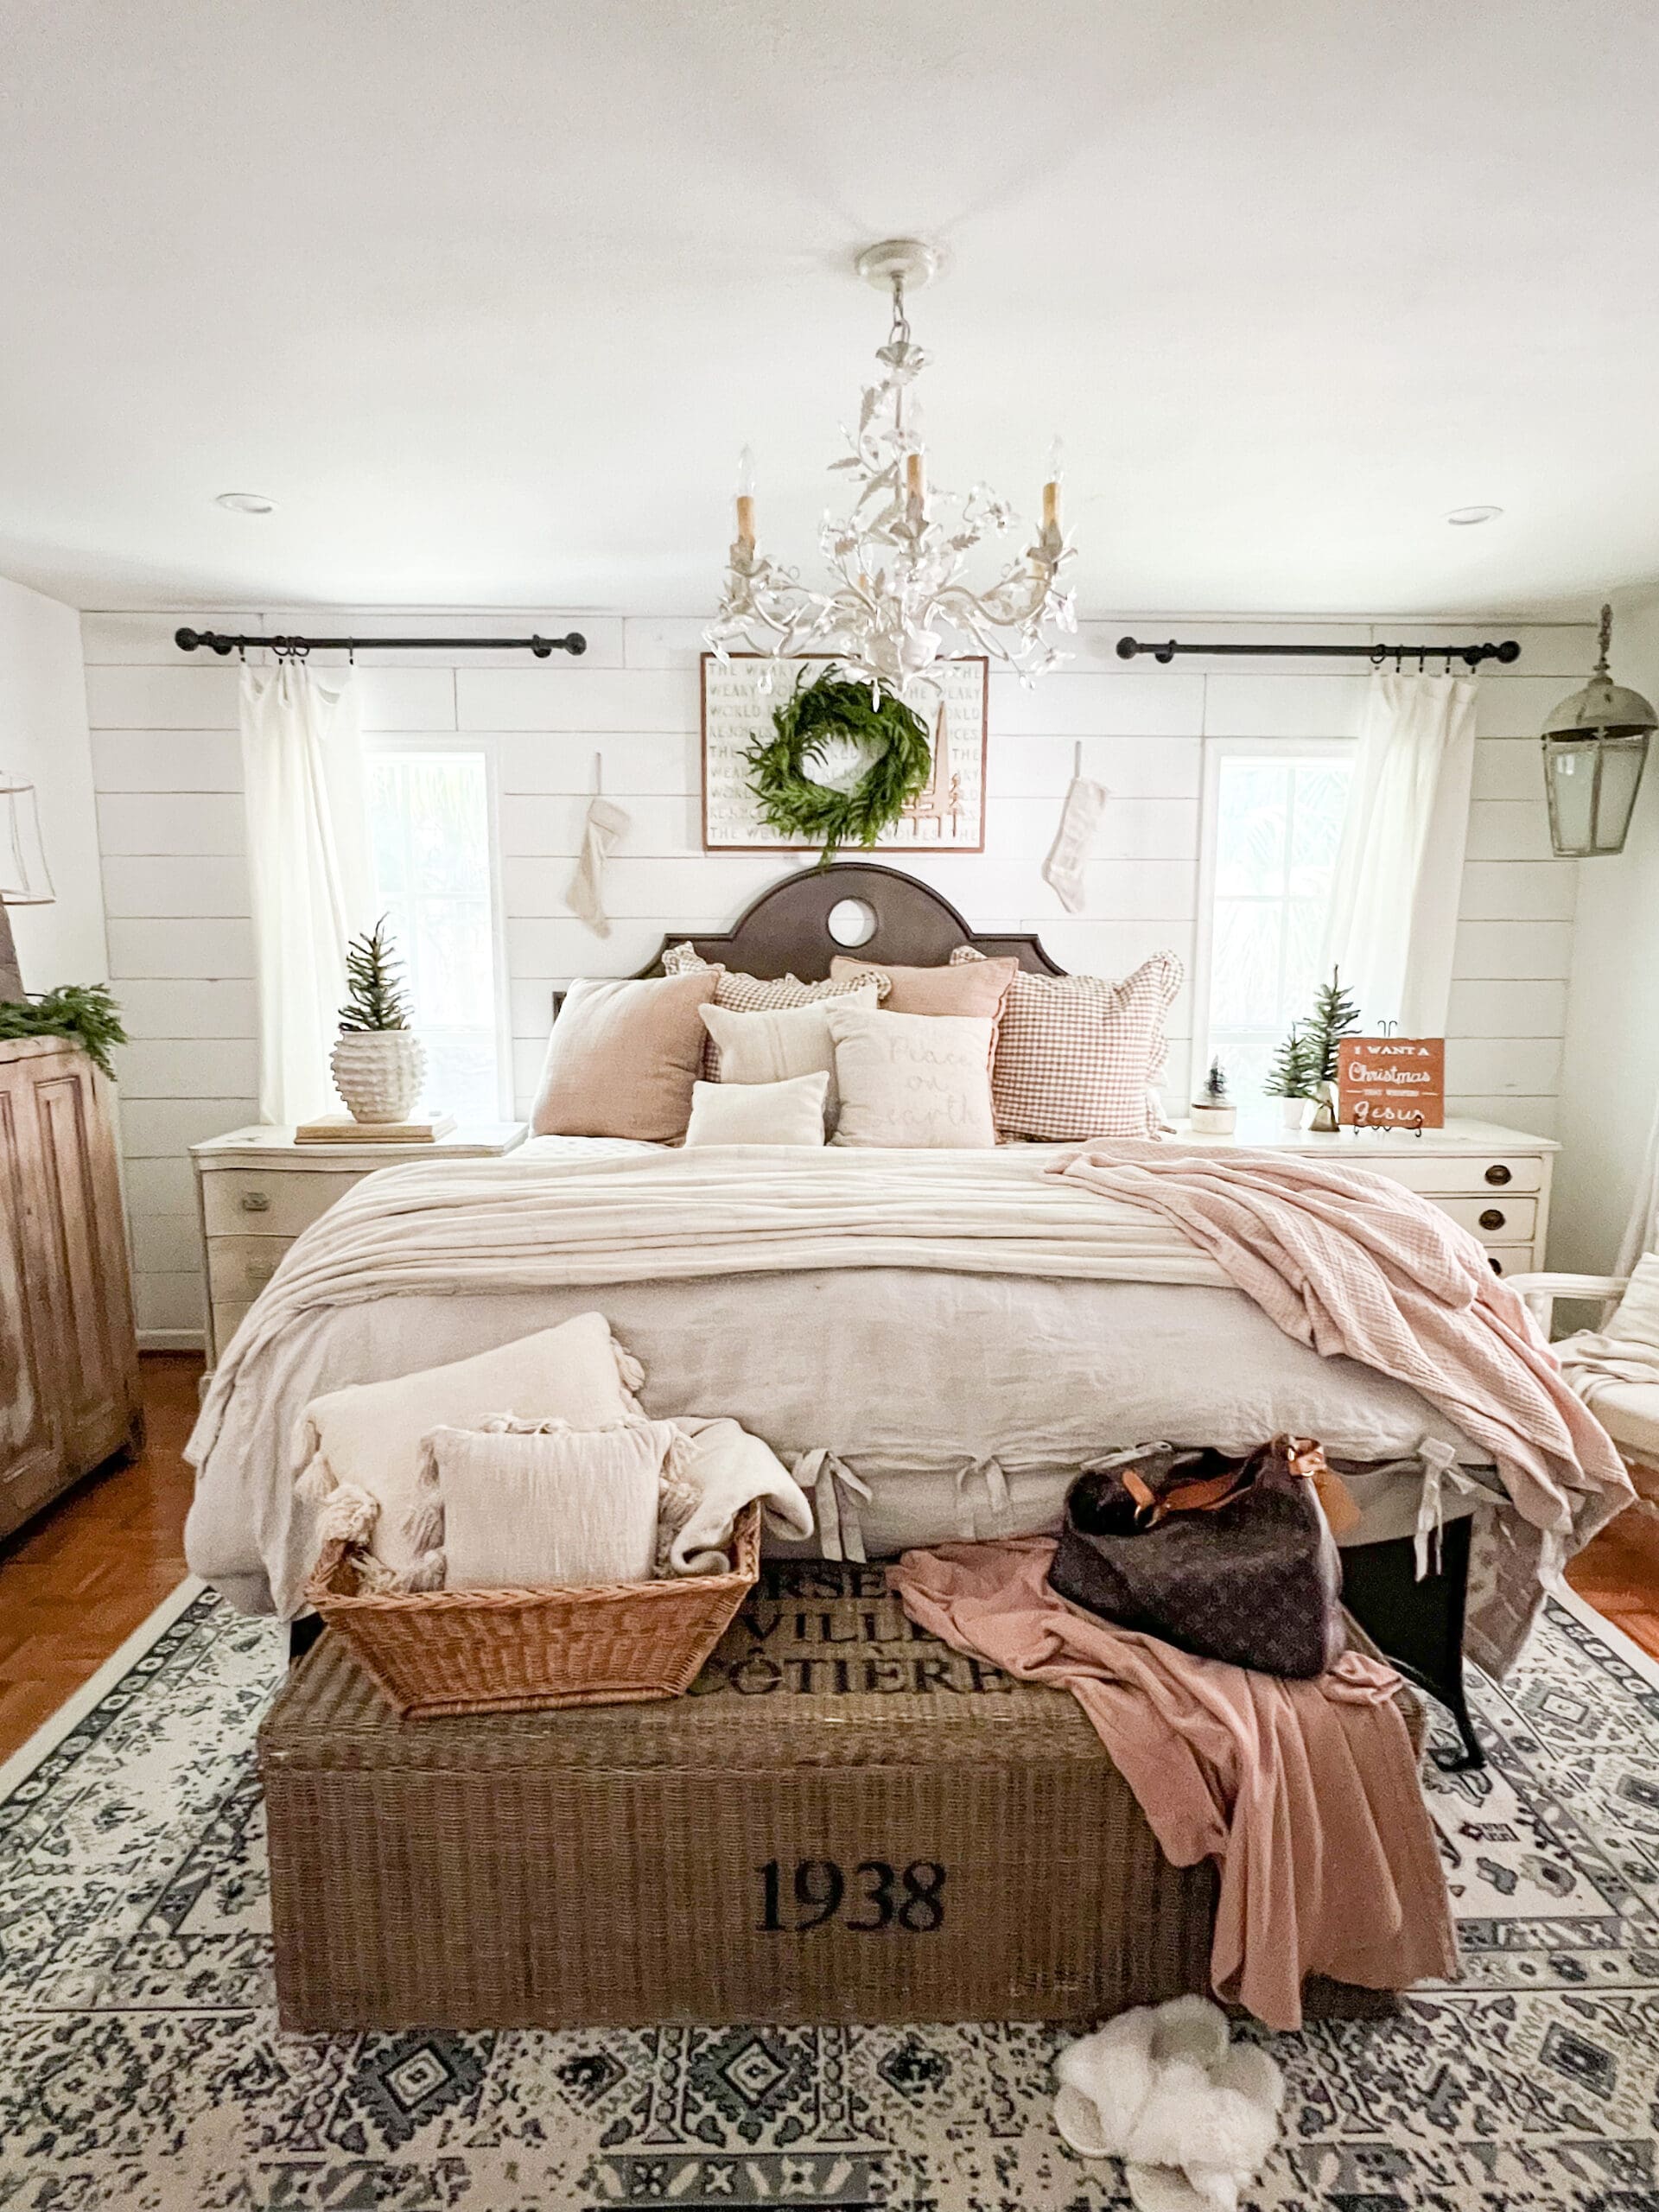 wide angle of a cozy Christmas bedroom